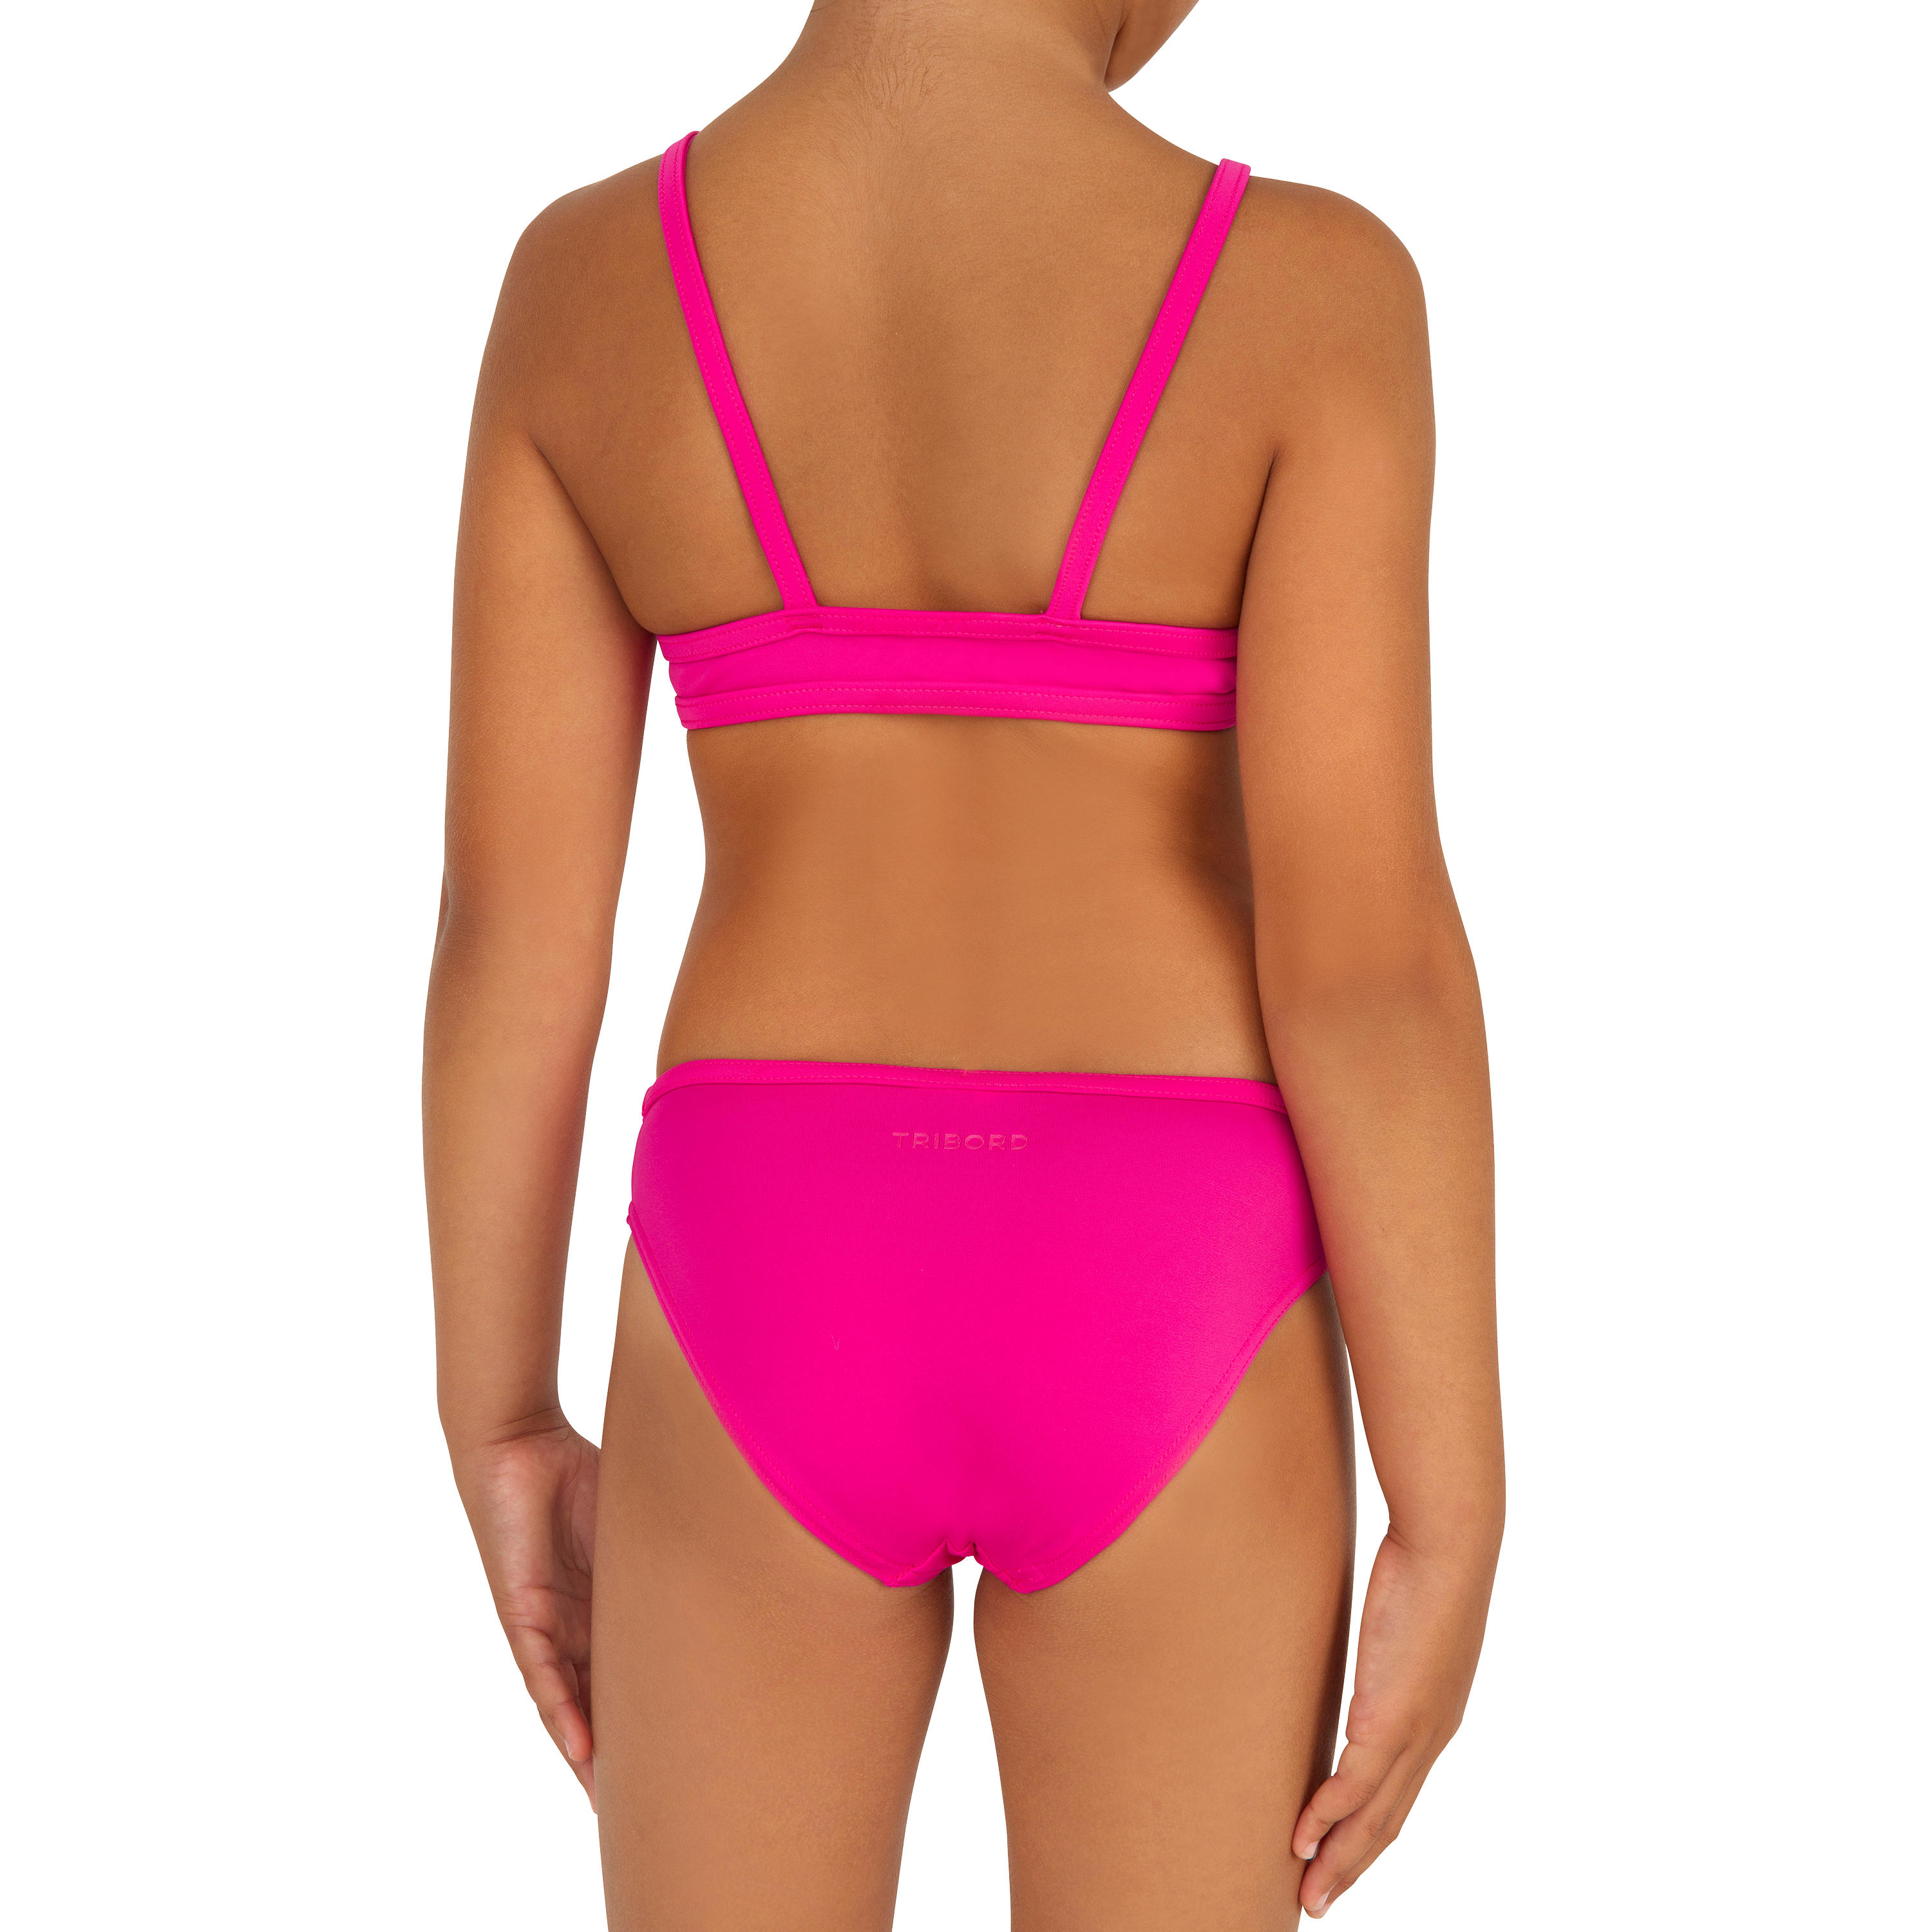 Girls' Two-Piece Crop Top Swimsuit - Bali Pink 5/8